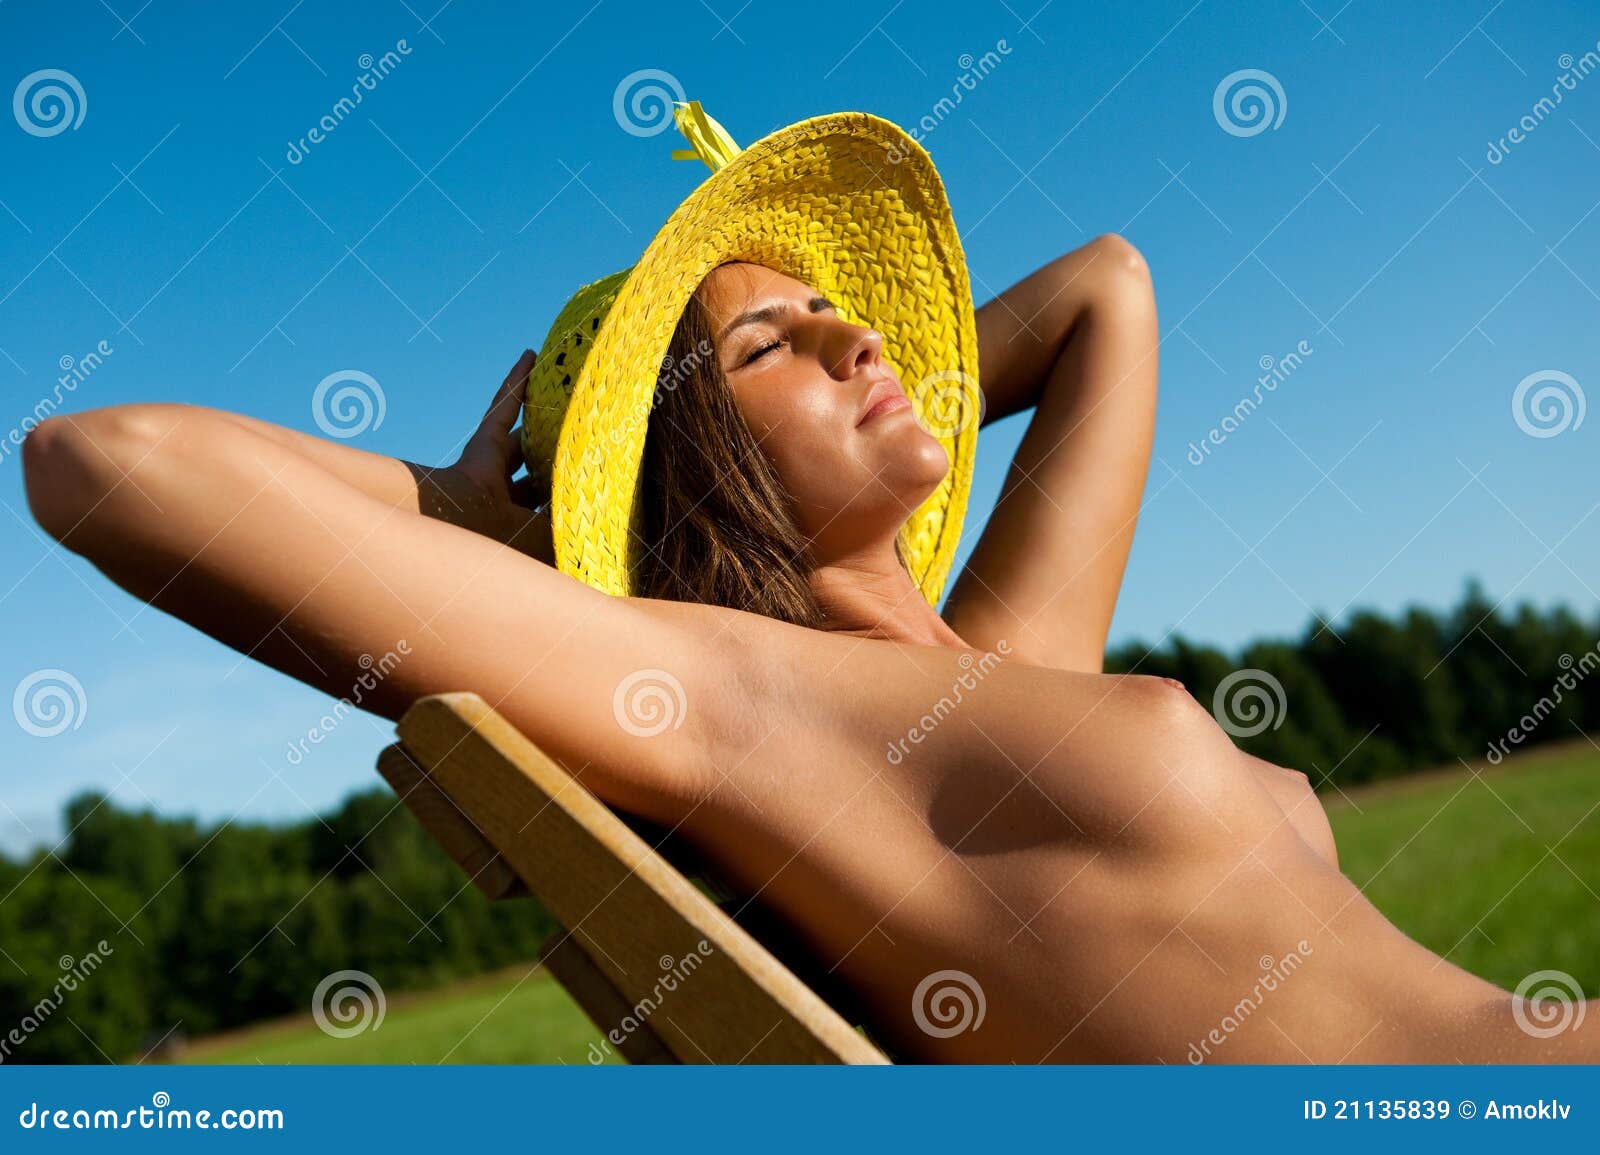 bhagavan prasad recommends Pictures Of Nude Sunbathers